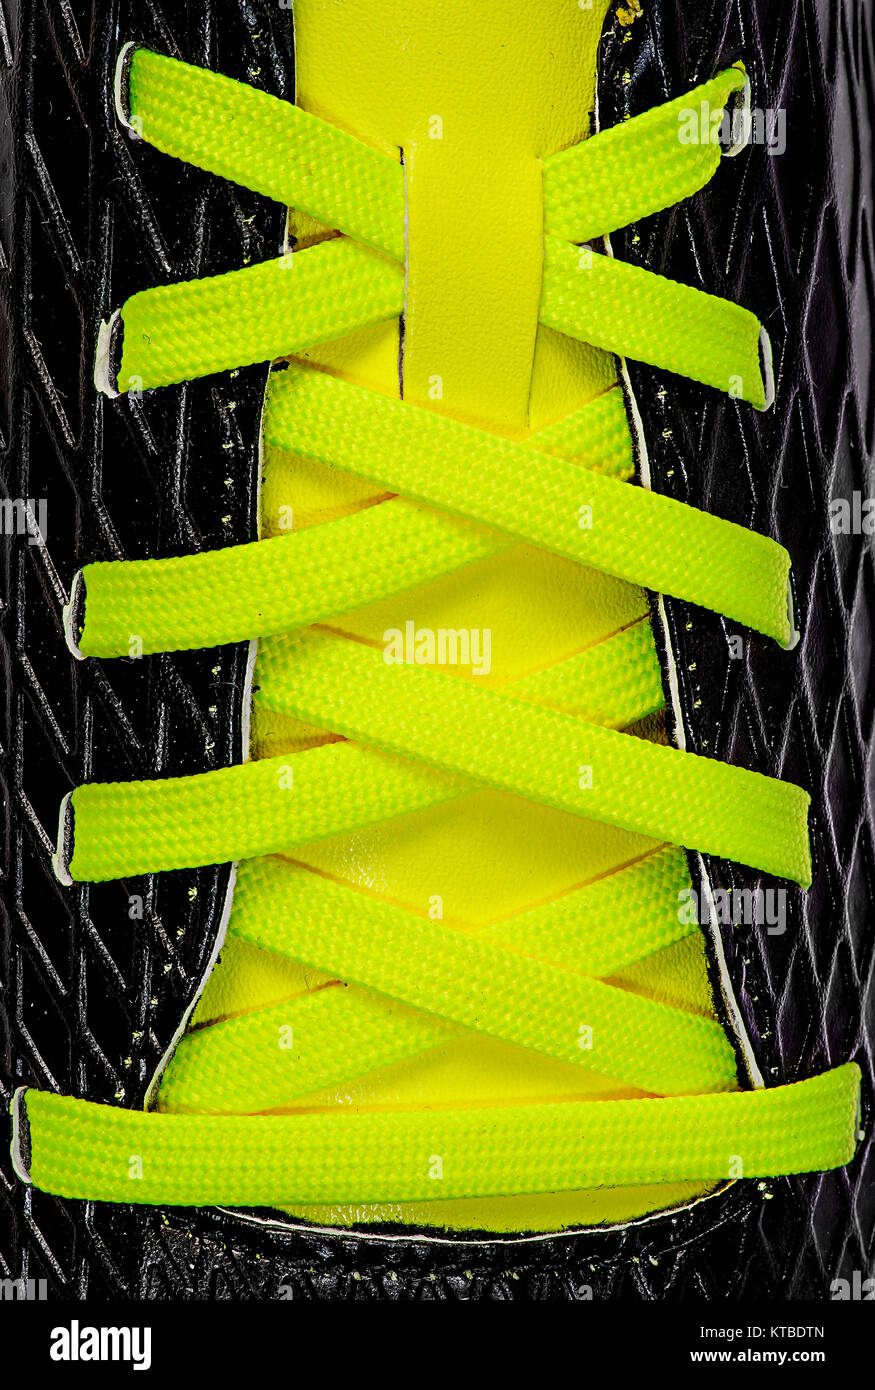 Closeup of yellow laces Stock Photo